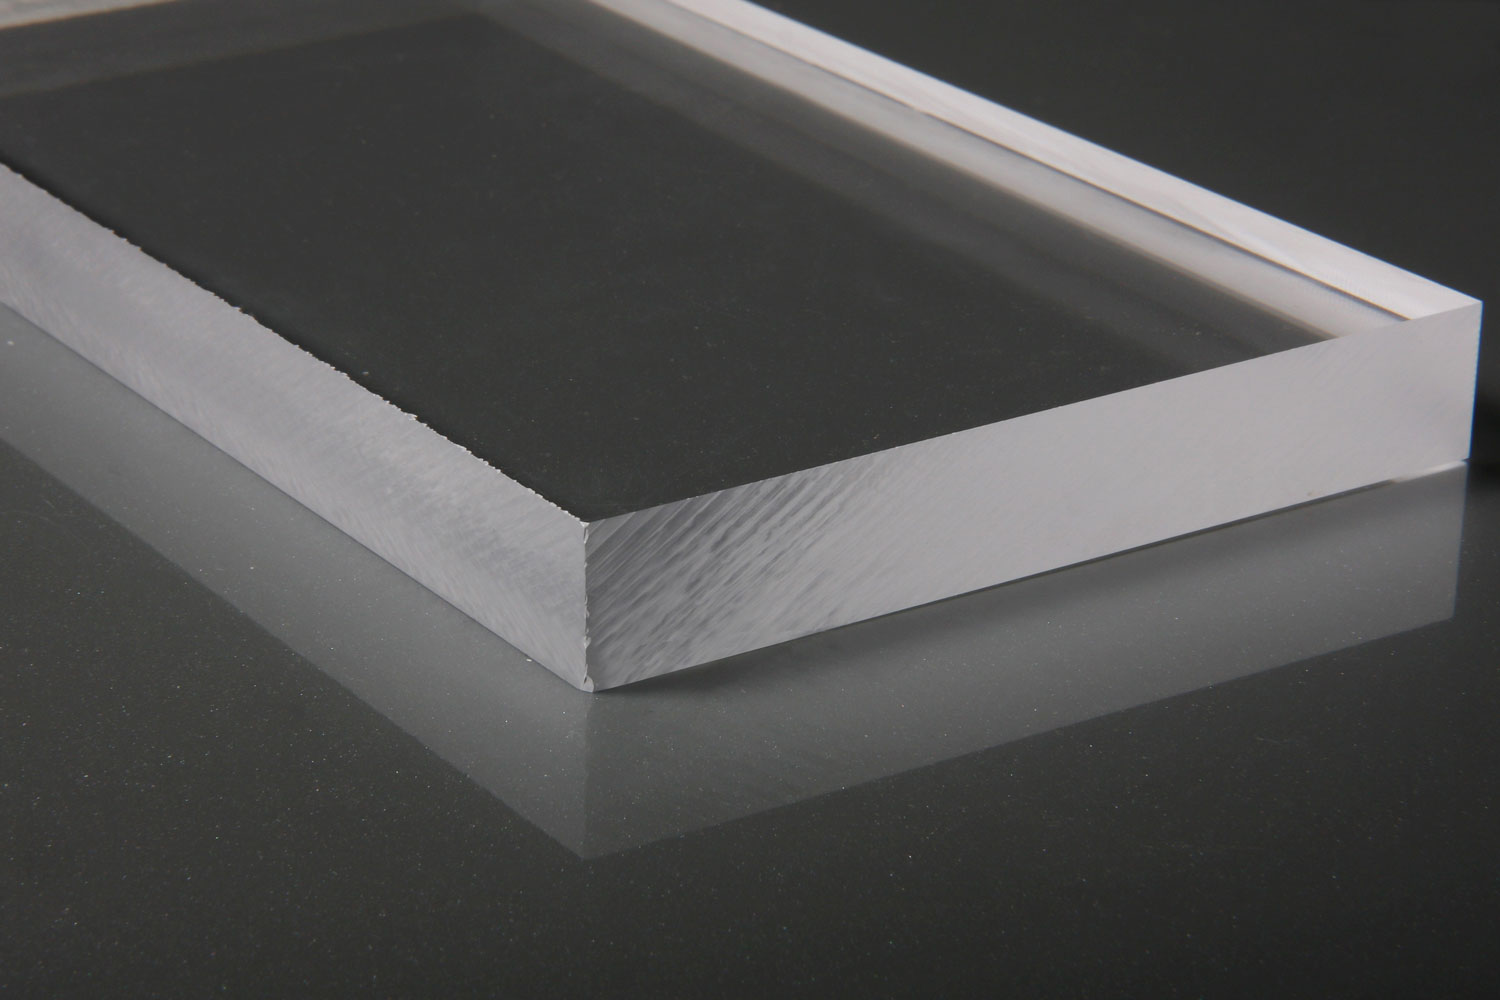 A huge block of plexiglass on a table